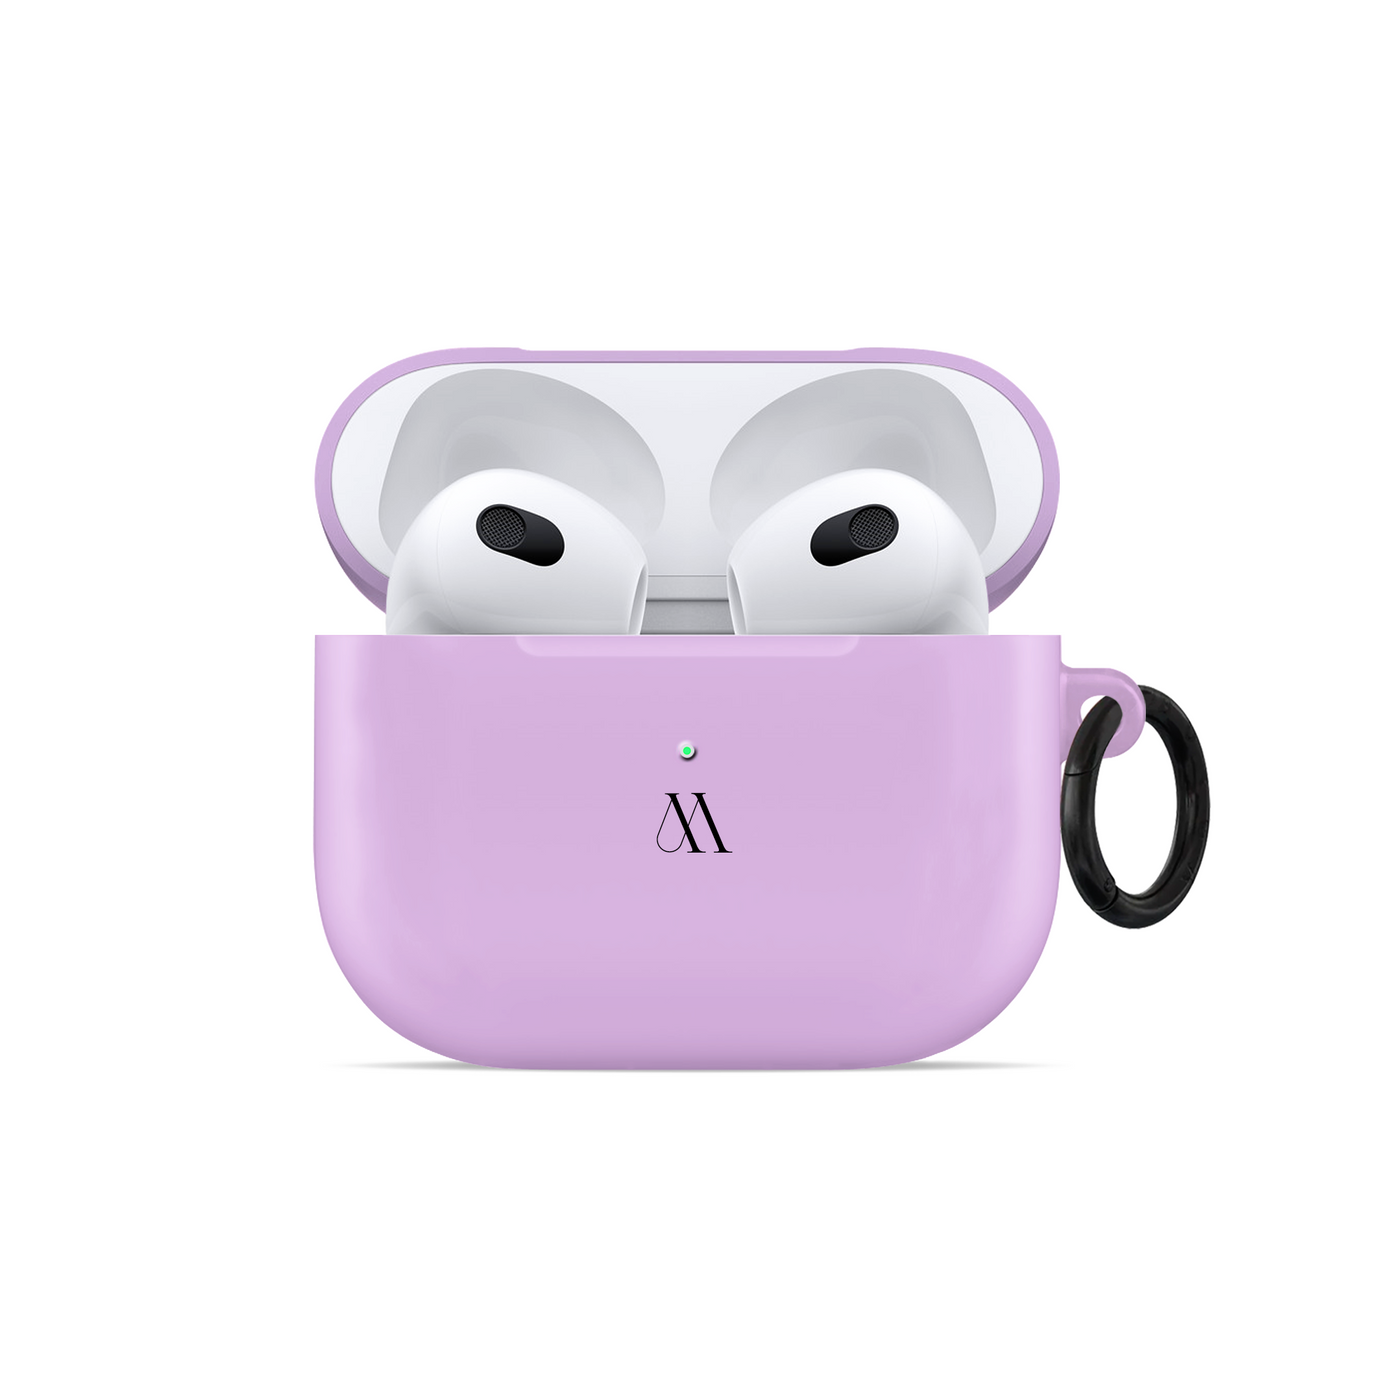 Pastel lilac Airpod case